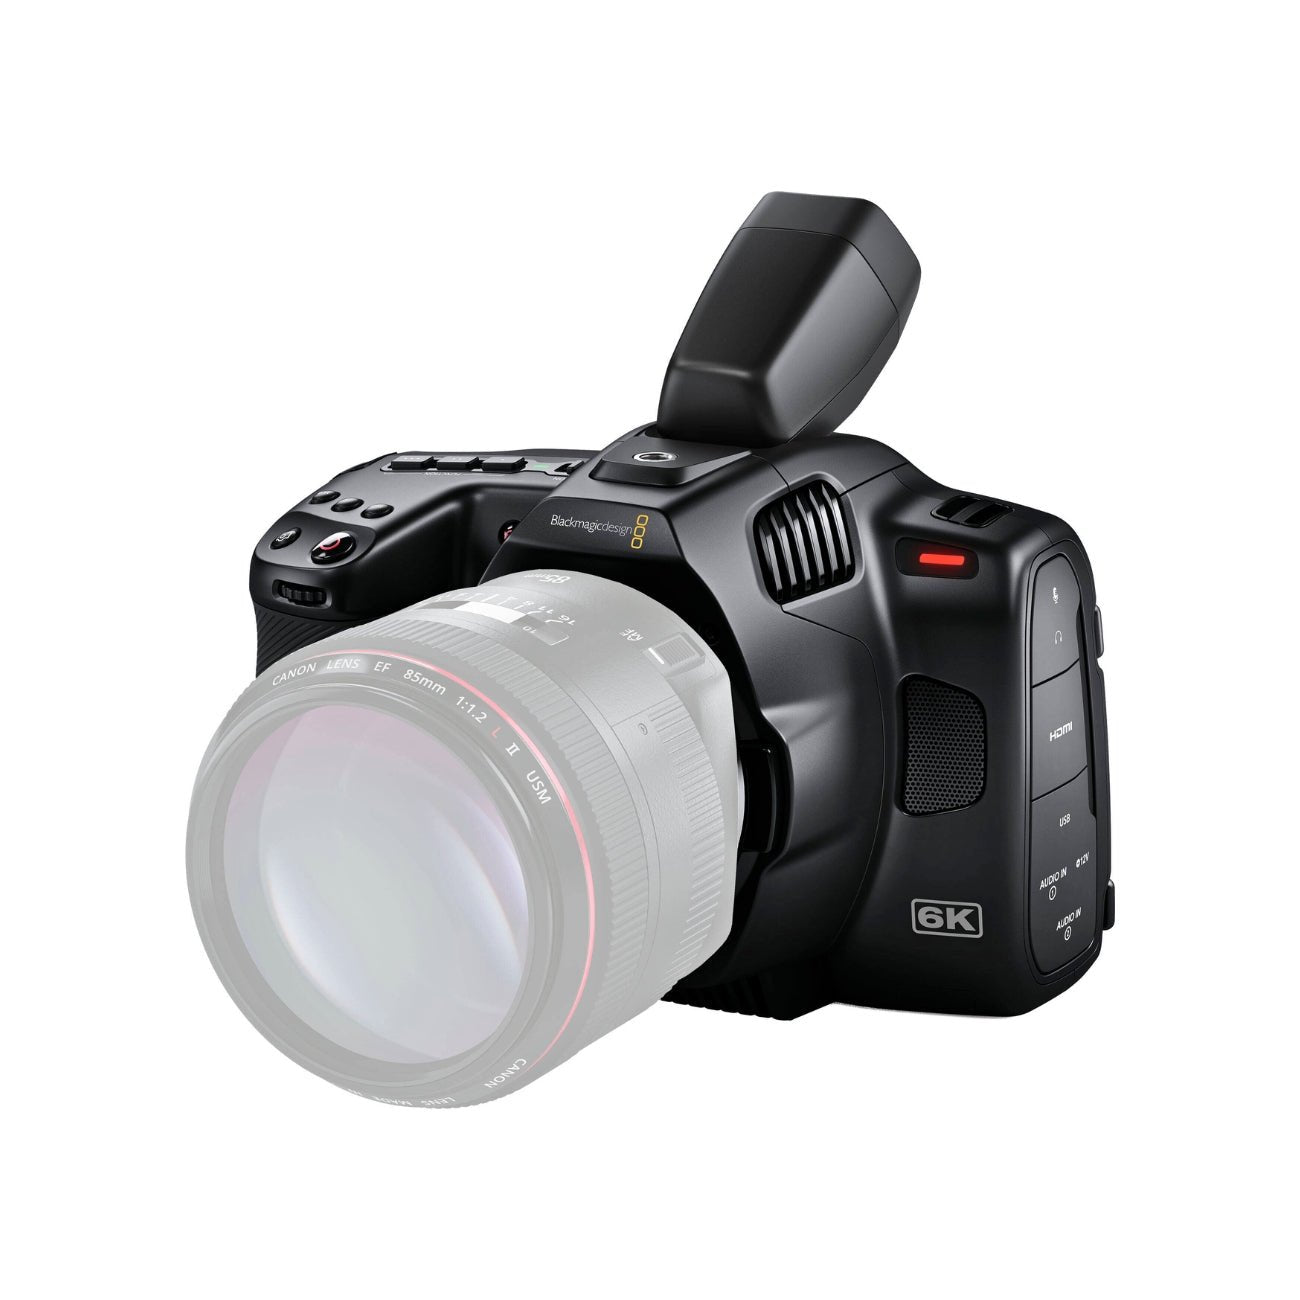 Blackmagic Design Pocket Cinema Camera 6K Pro with DaVinci Resolve Studio with optical lens